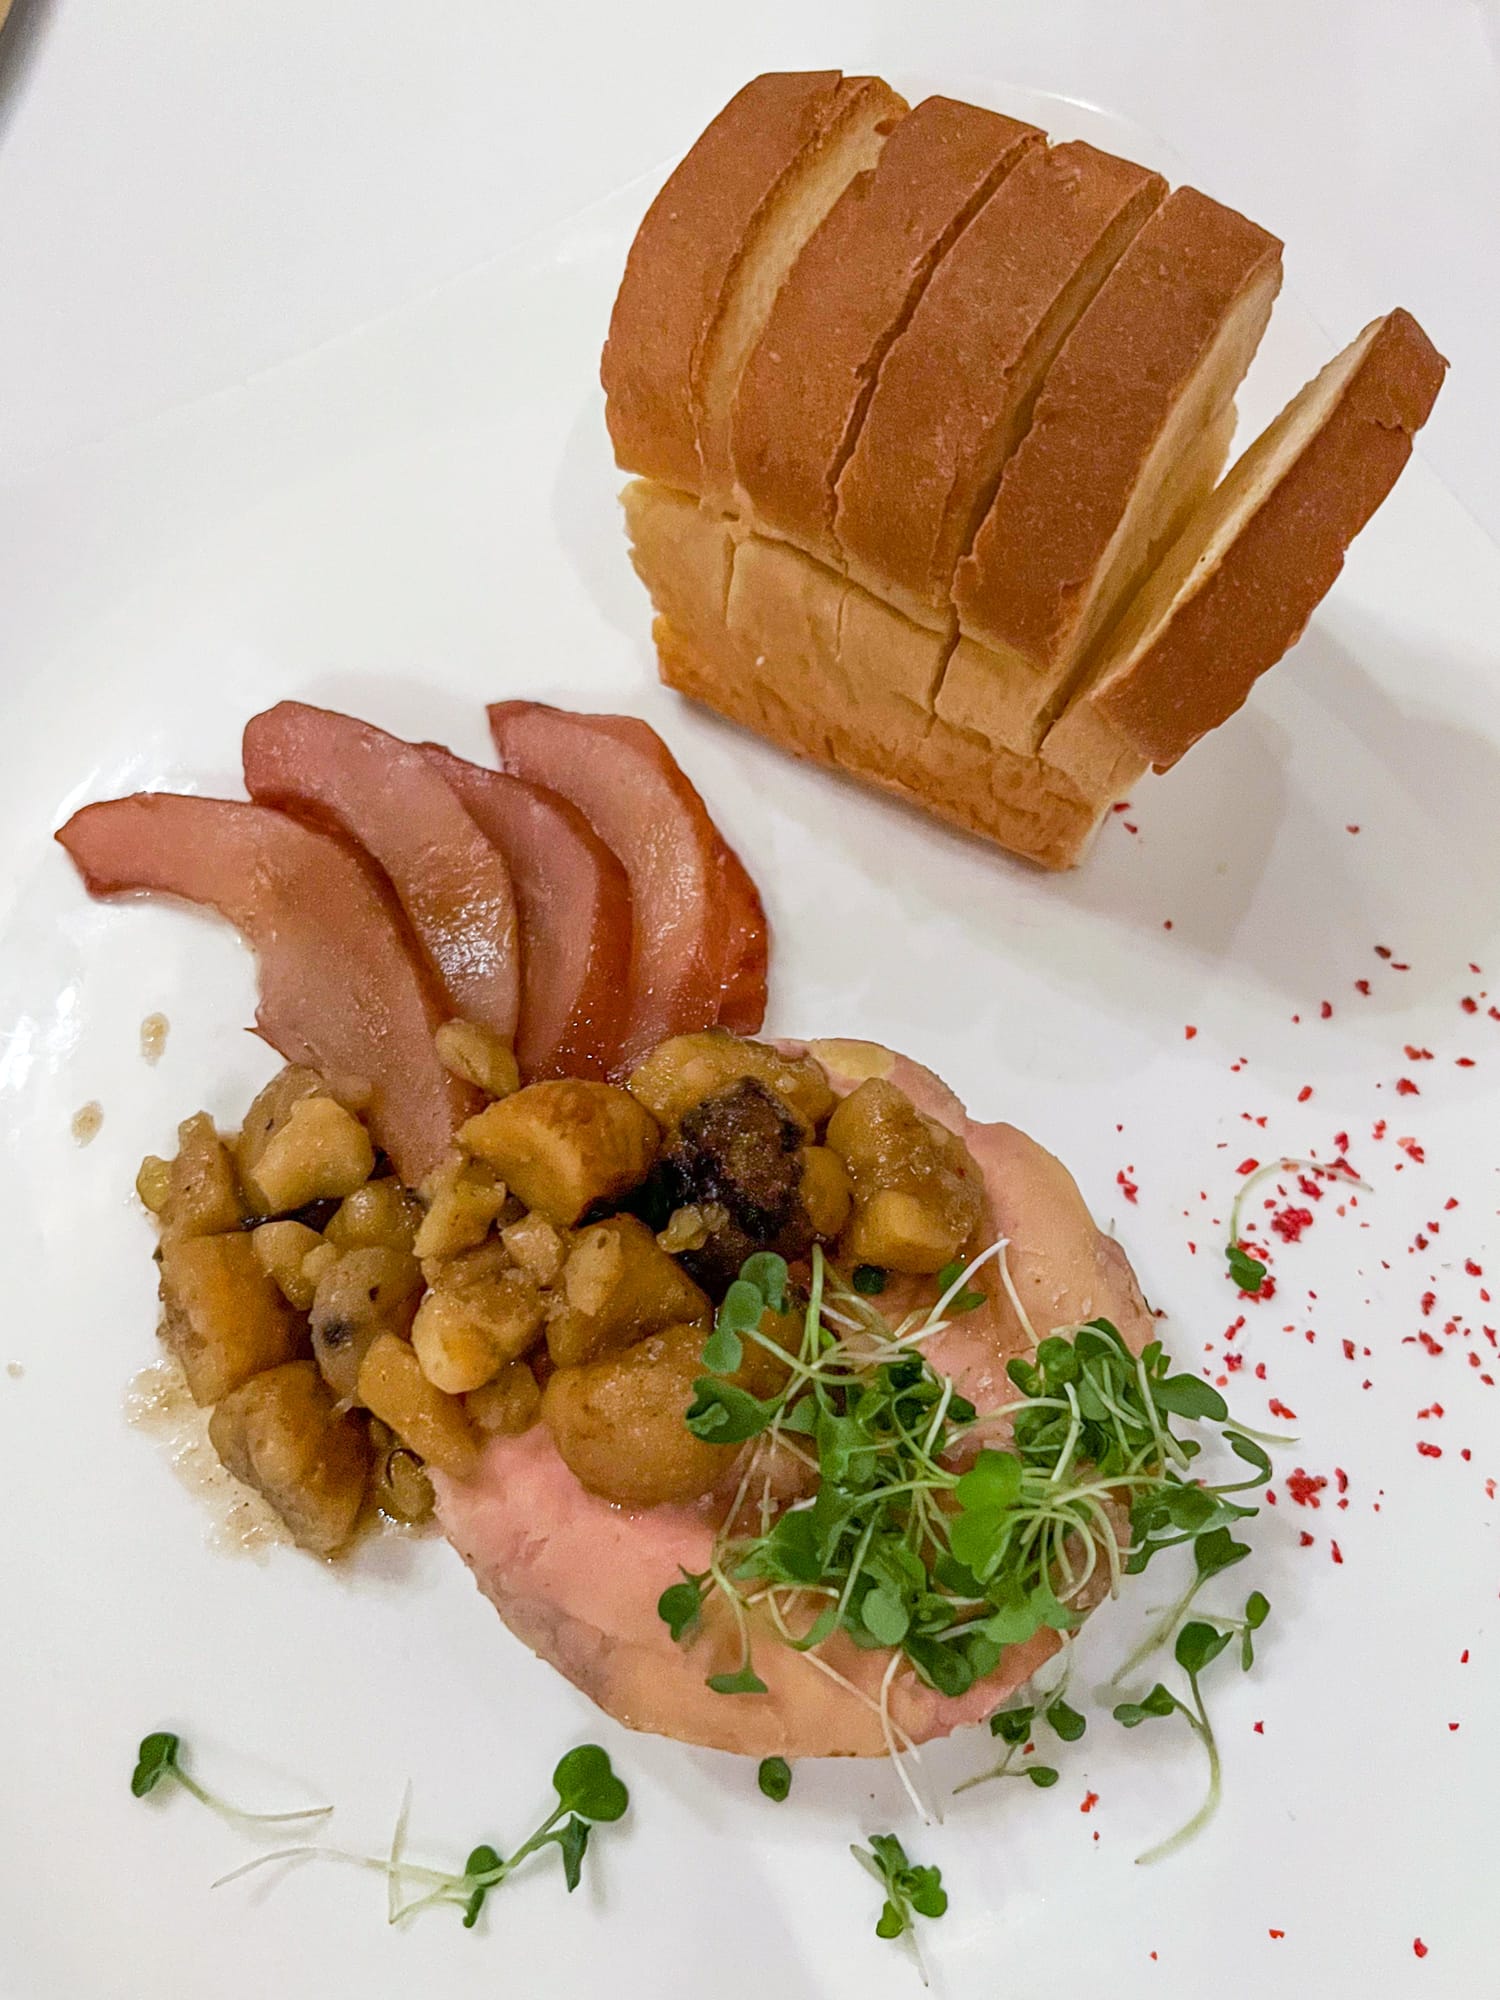 Foie gras torchon with cardamom spiced pears, chestnut marmalade, and brioche